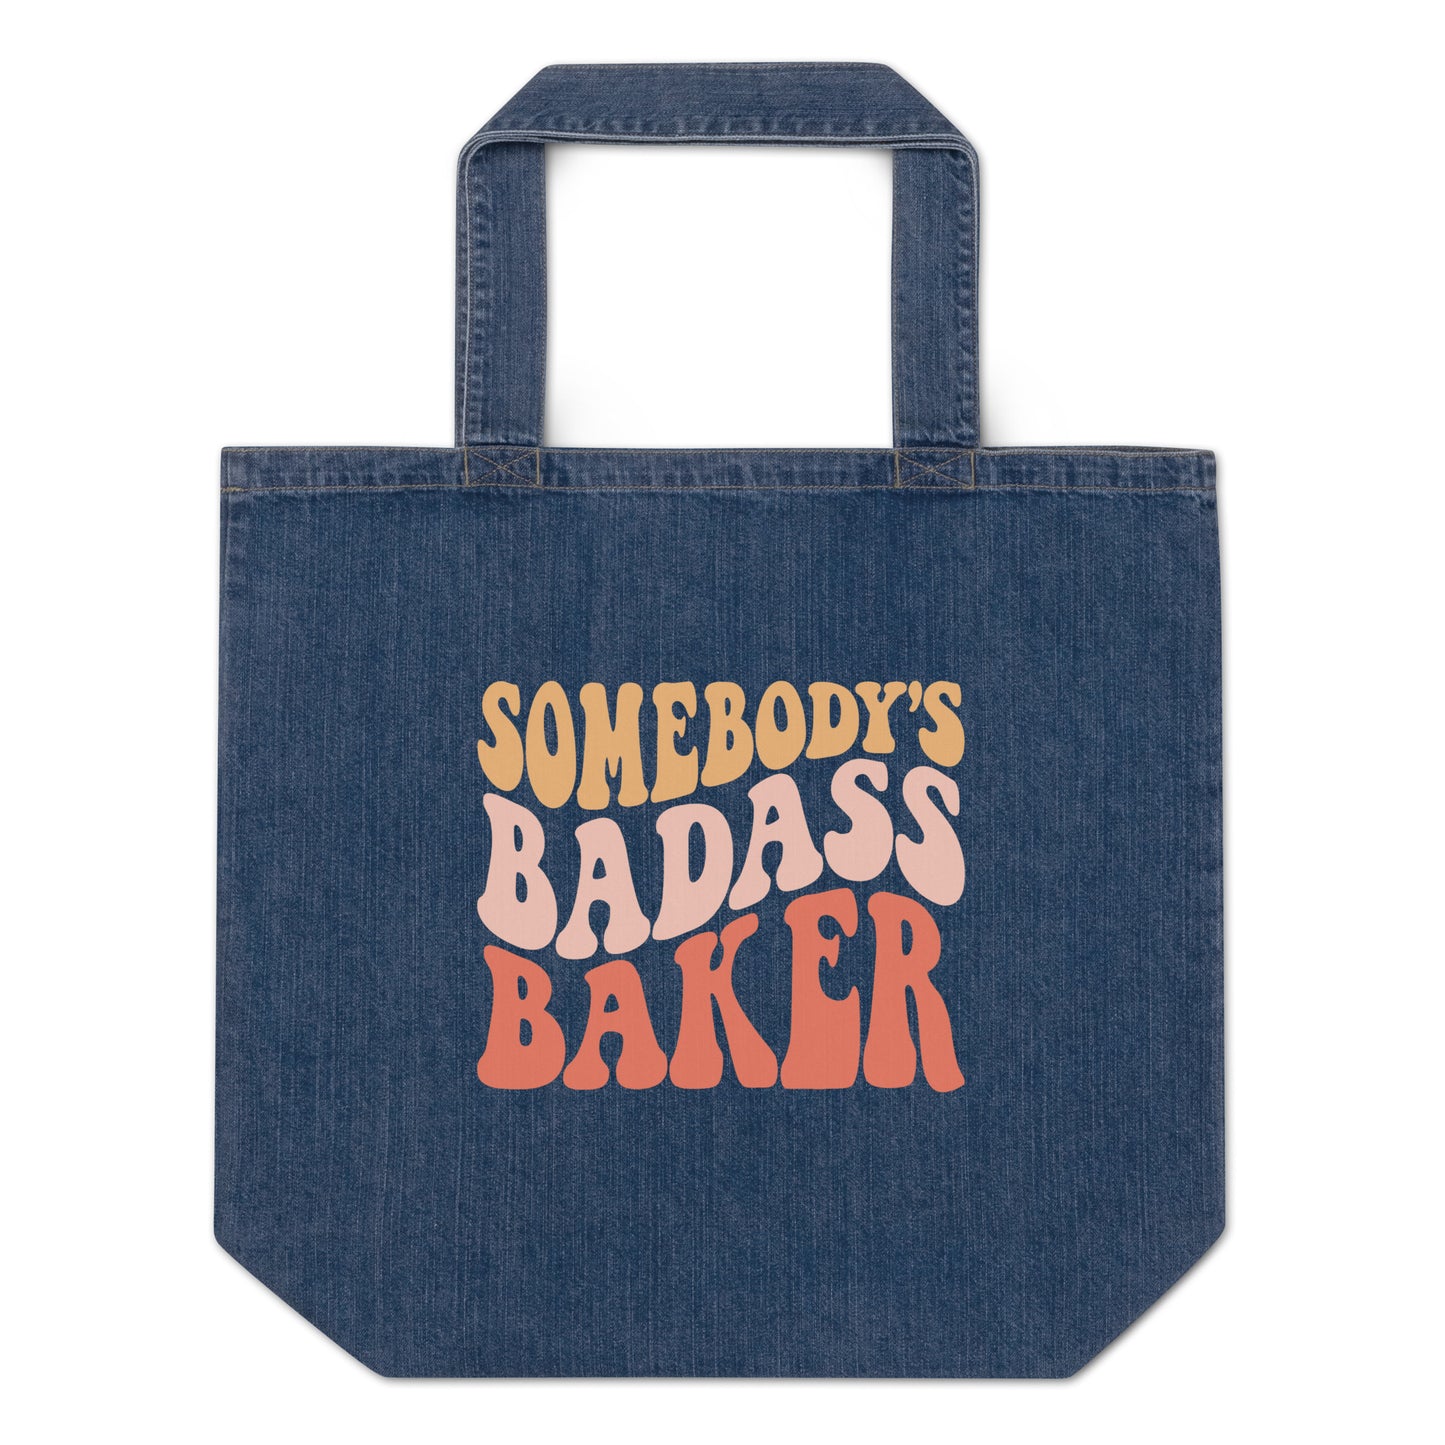 Somebody's Badass Bakery Organic Denim Tote Bag